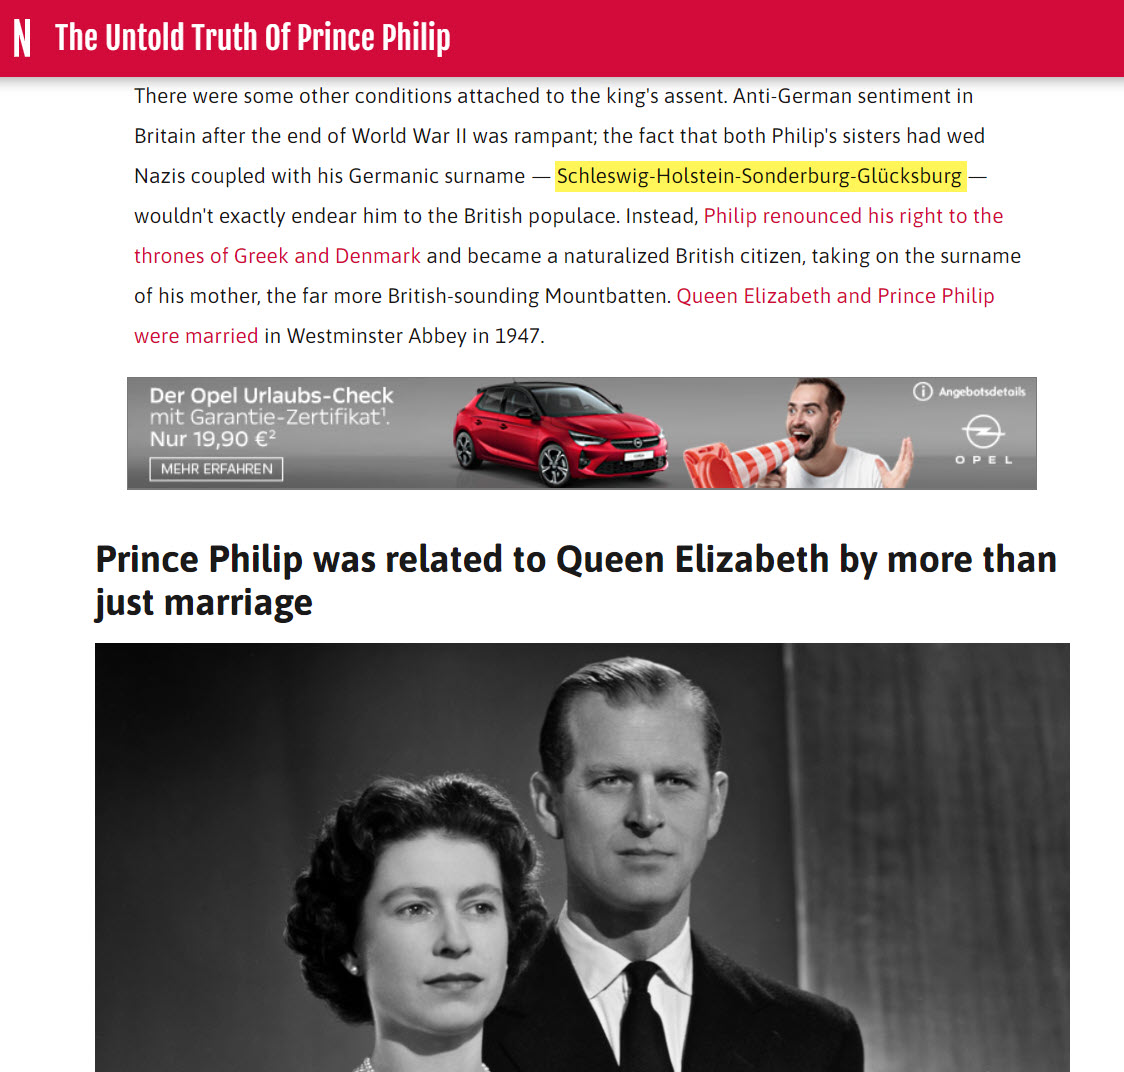 Philip, Duke of Edinburgh